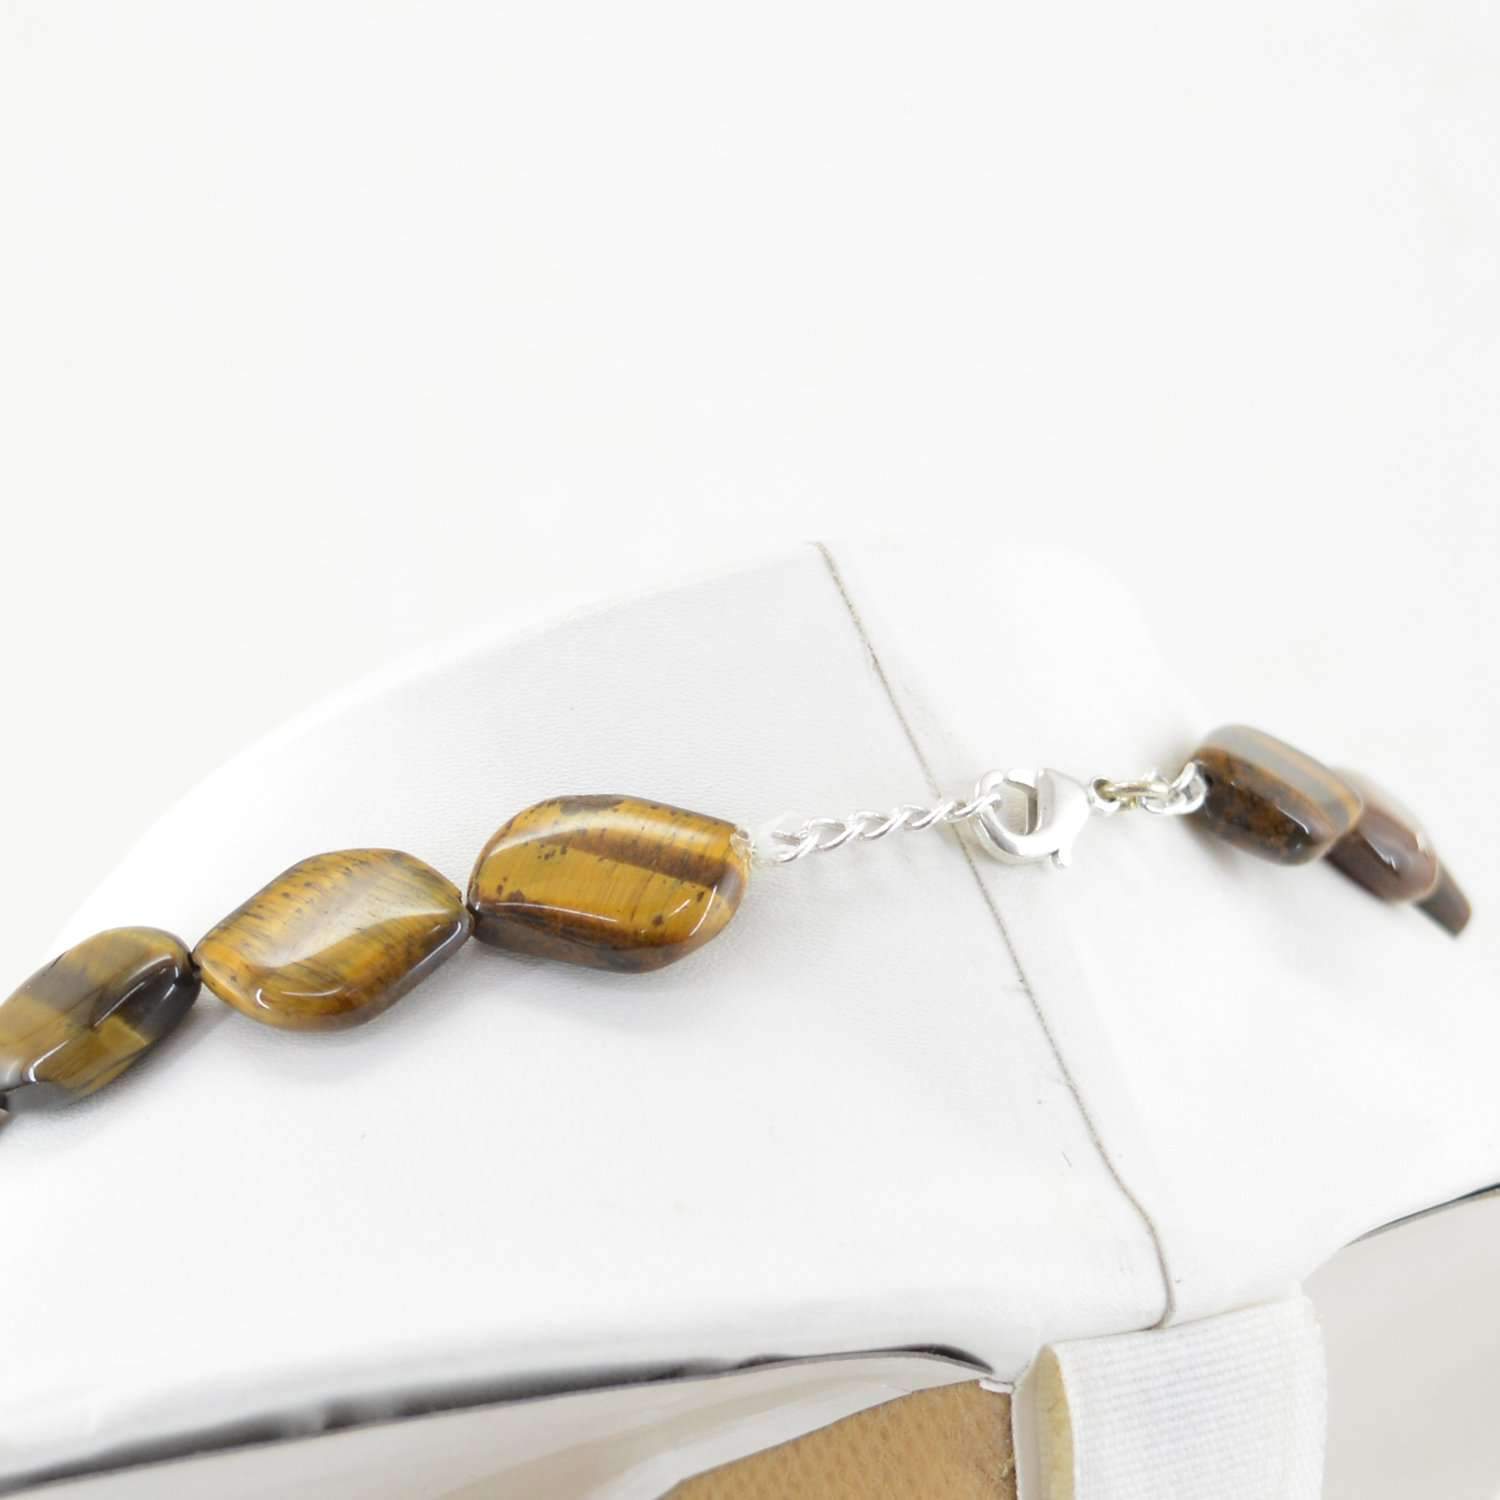 gemsmore:Golden Tiger Eye Necklace Natural Single Strand Untreated Beads